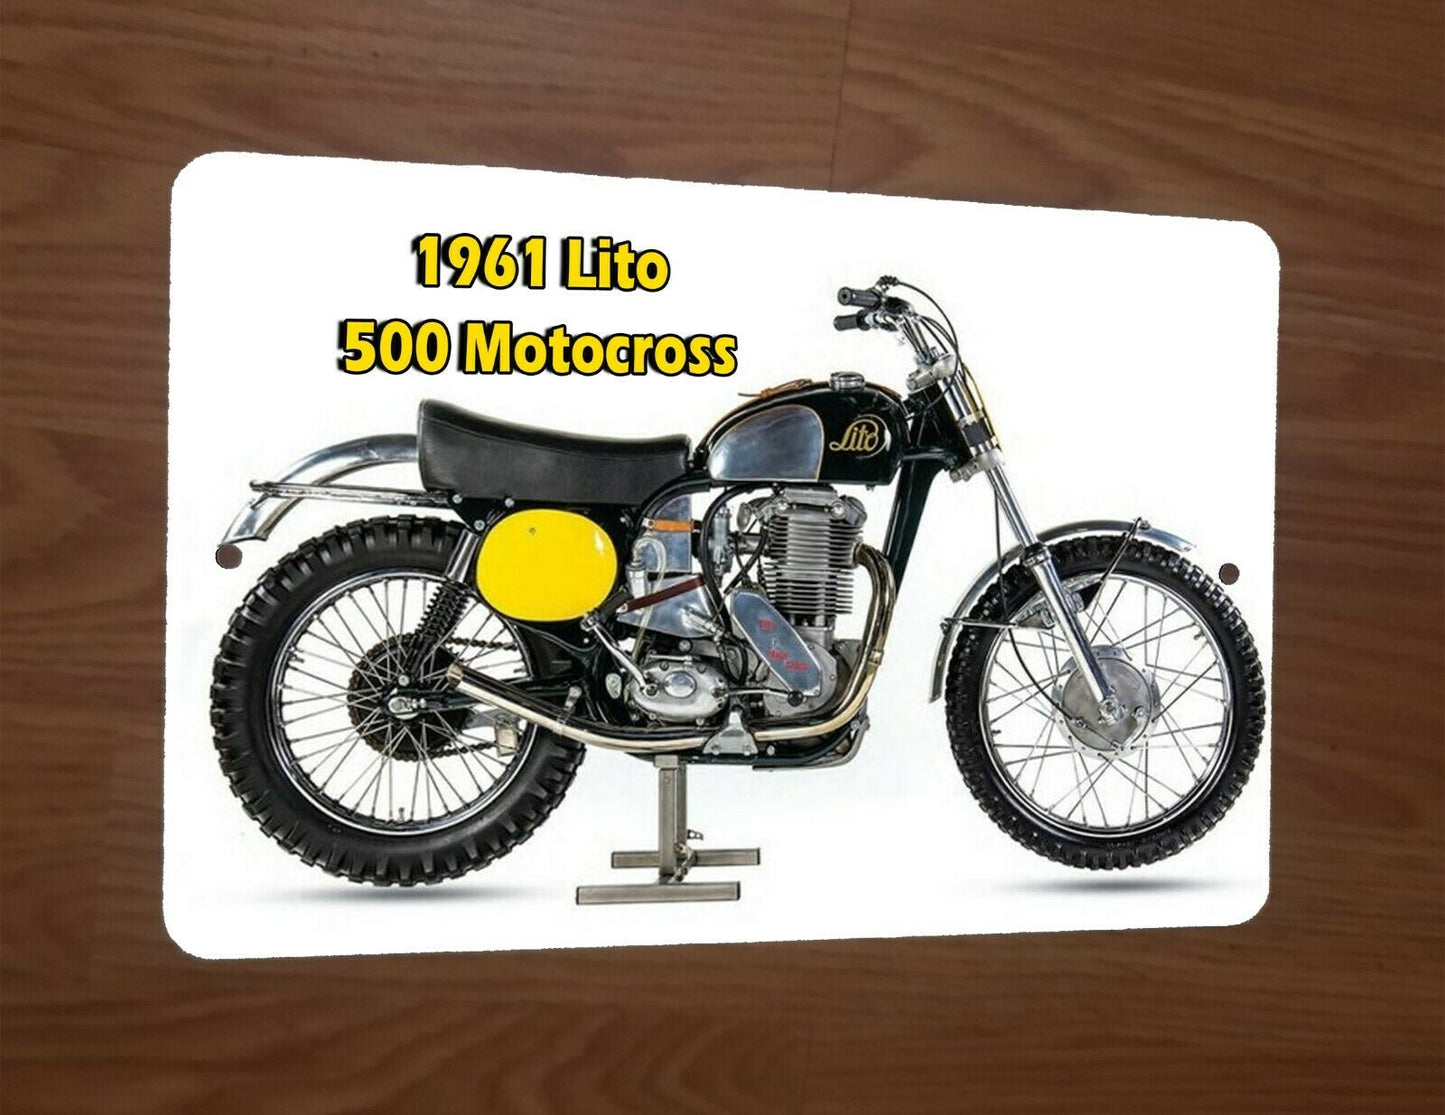 1961 Lito 500 Motocross Motorcycle Dirt Bike 8x12 Metal Wall Sign